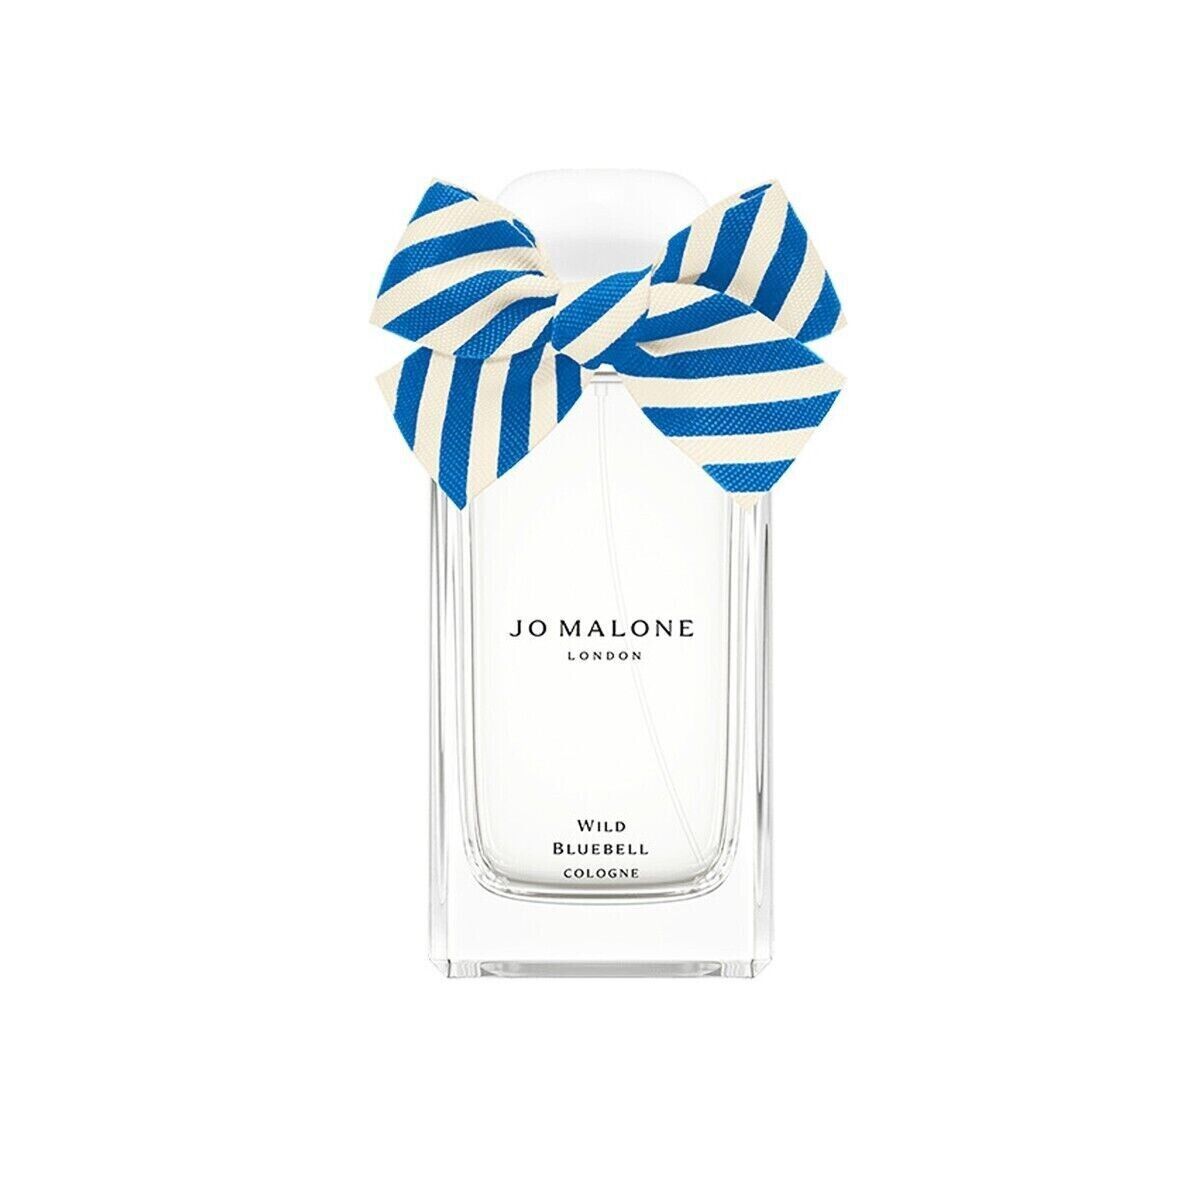 JO MALONE Wild Bluebell Cologne Perfume Spray Unisex 3.4oz 100ml Estee Lauder NW - $88.61